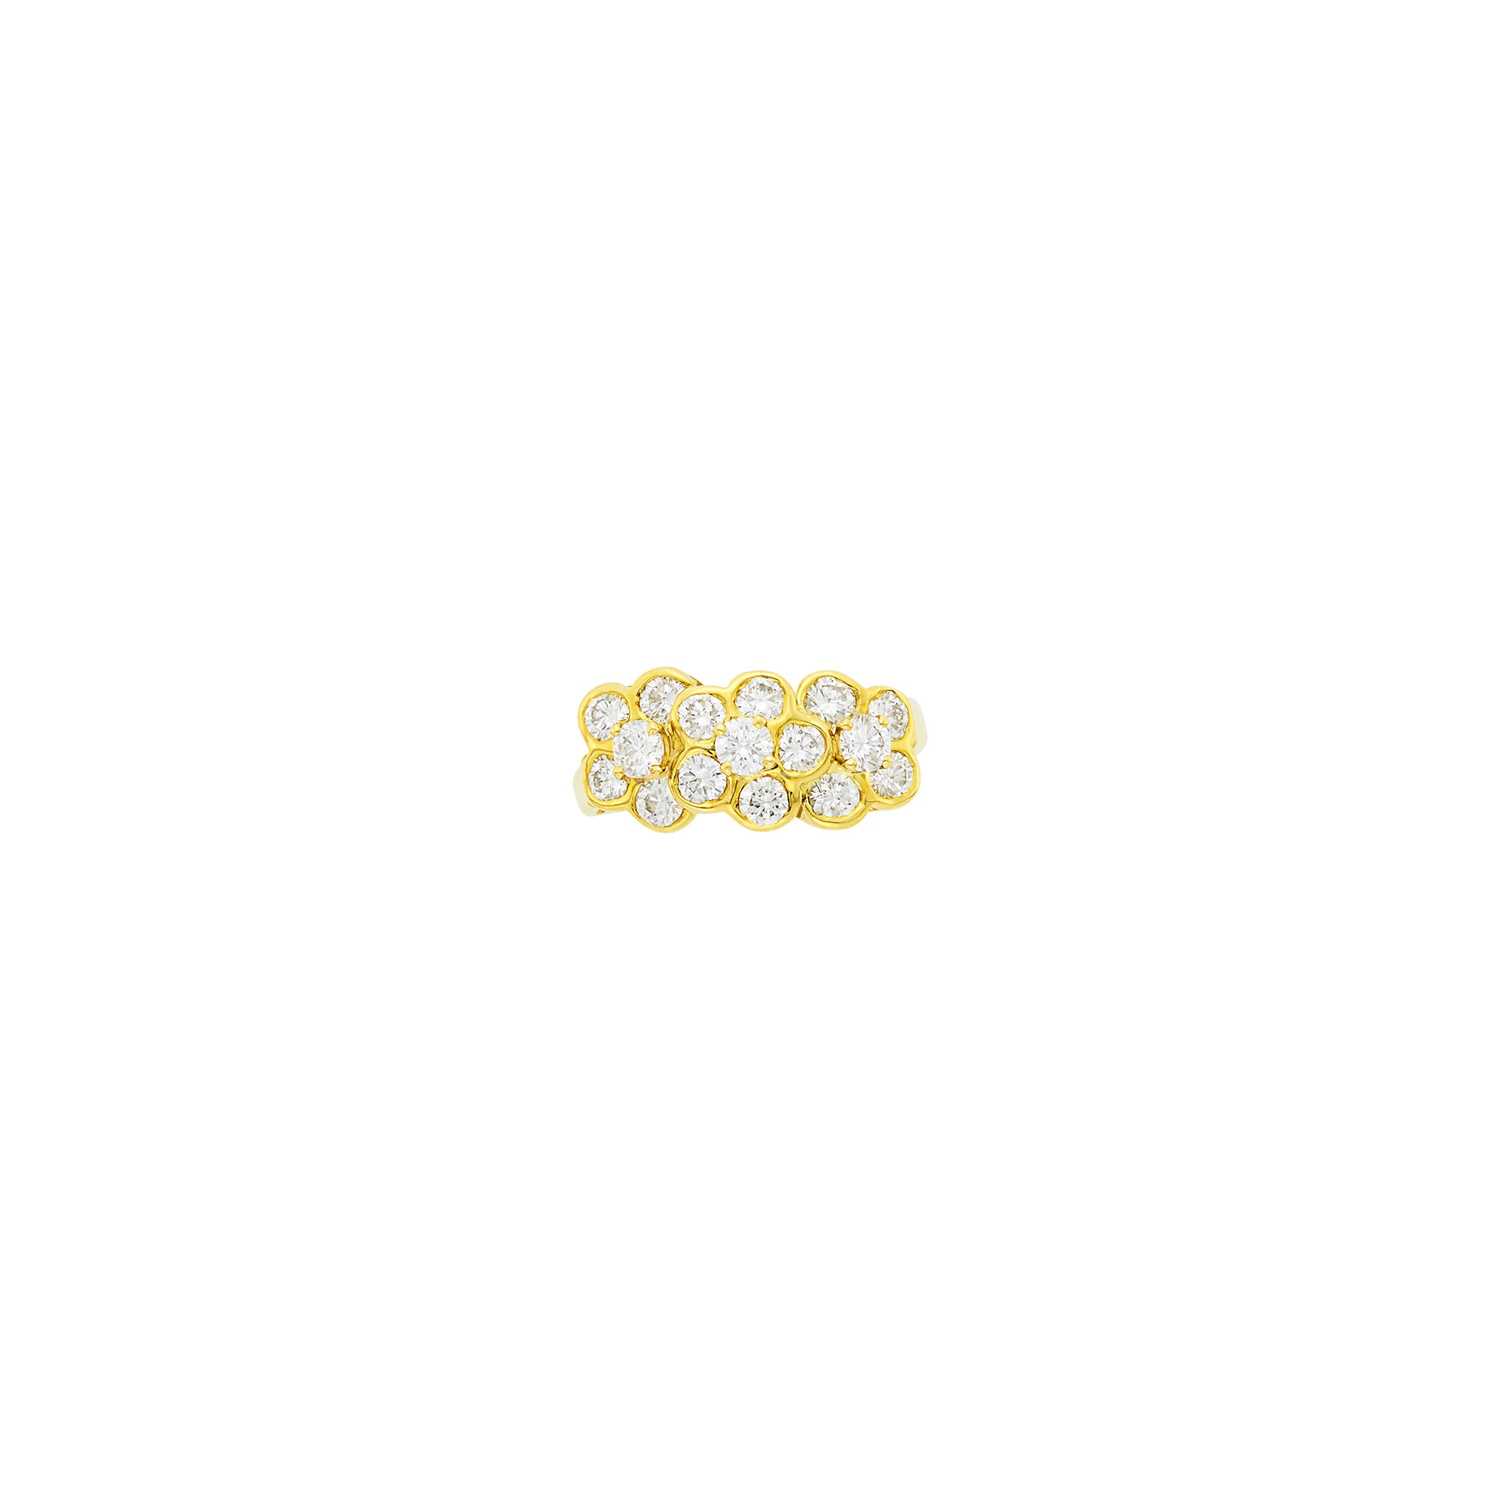 Lot 129 - Van Cleef & Arpels Gold and Diamond Floret Ring